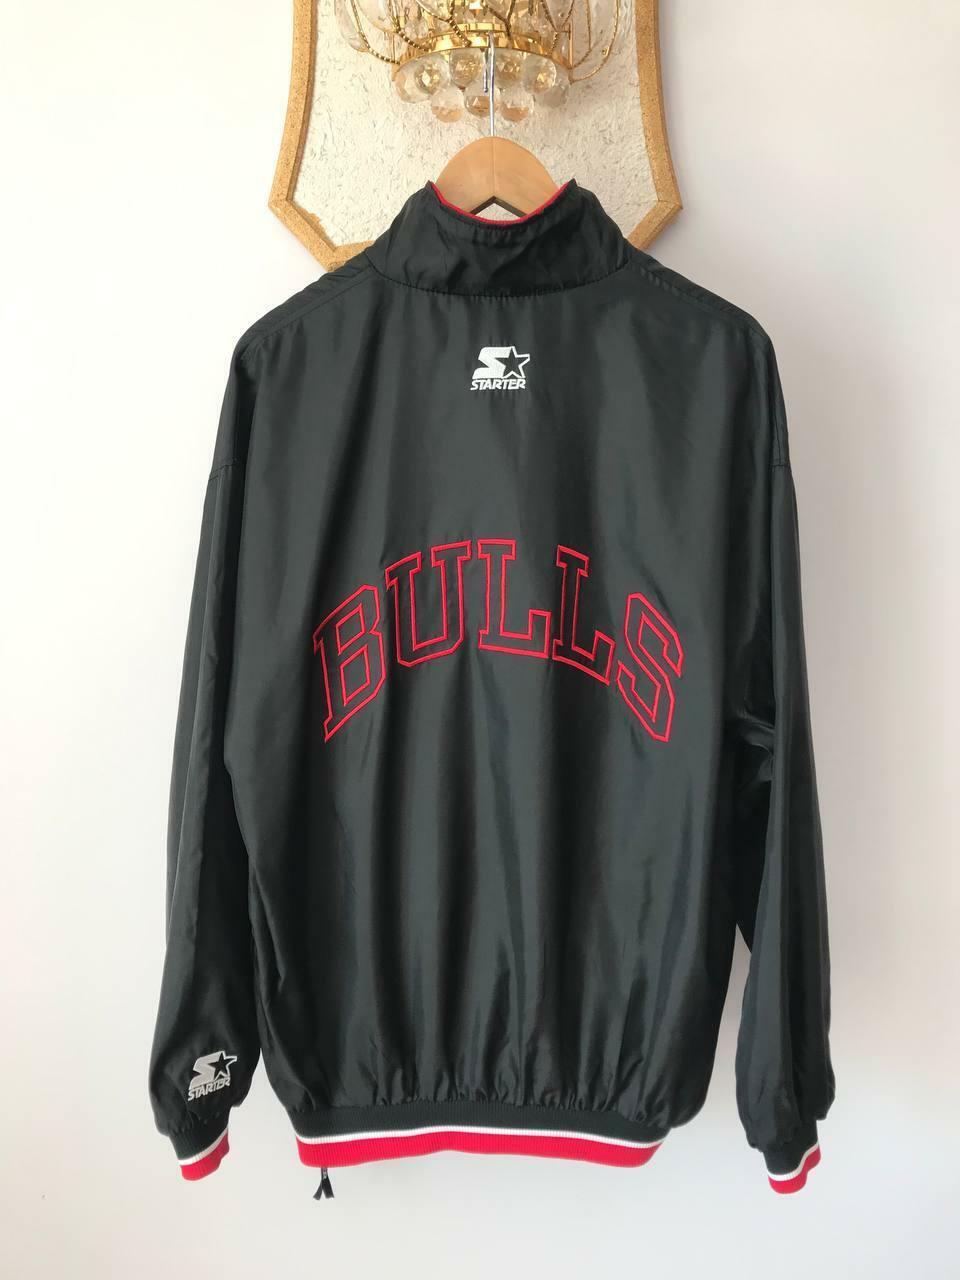 Chicago Bulls Vintage 1990s NBA Leather Jacket 